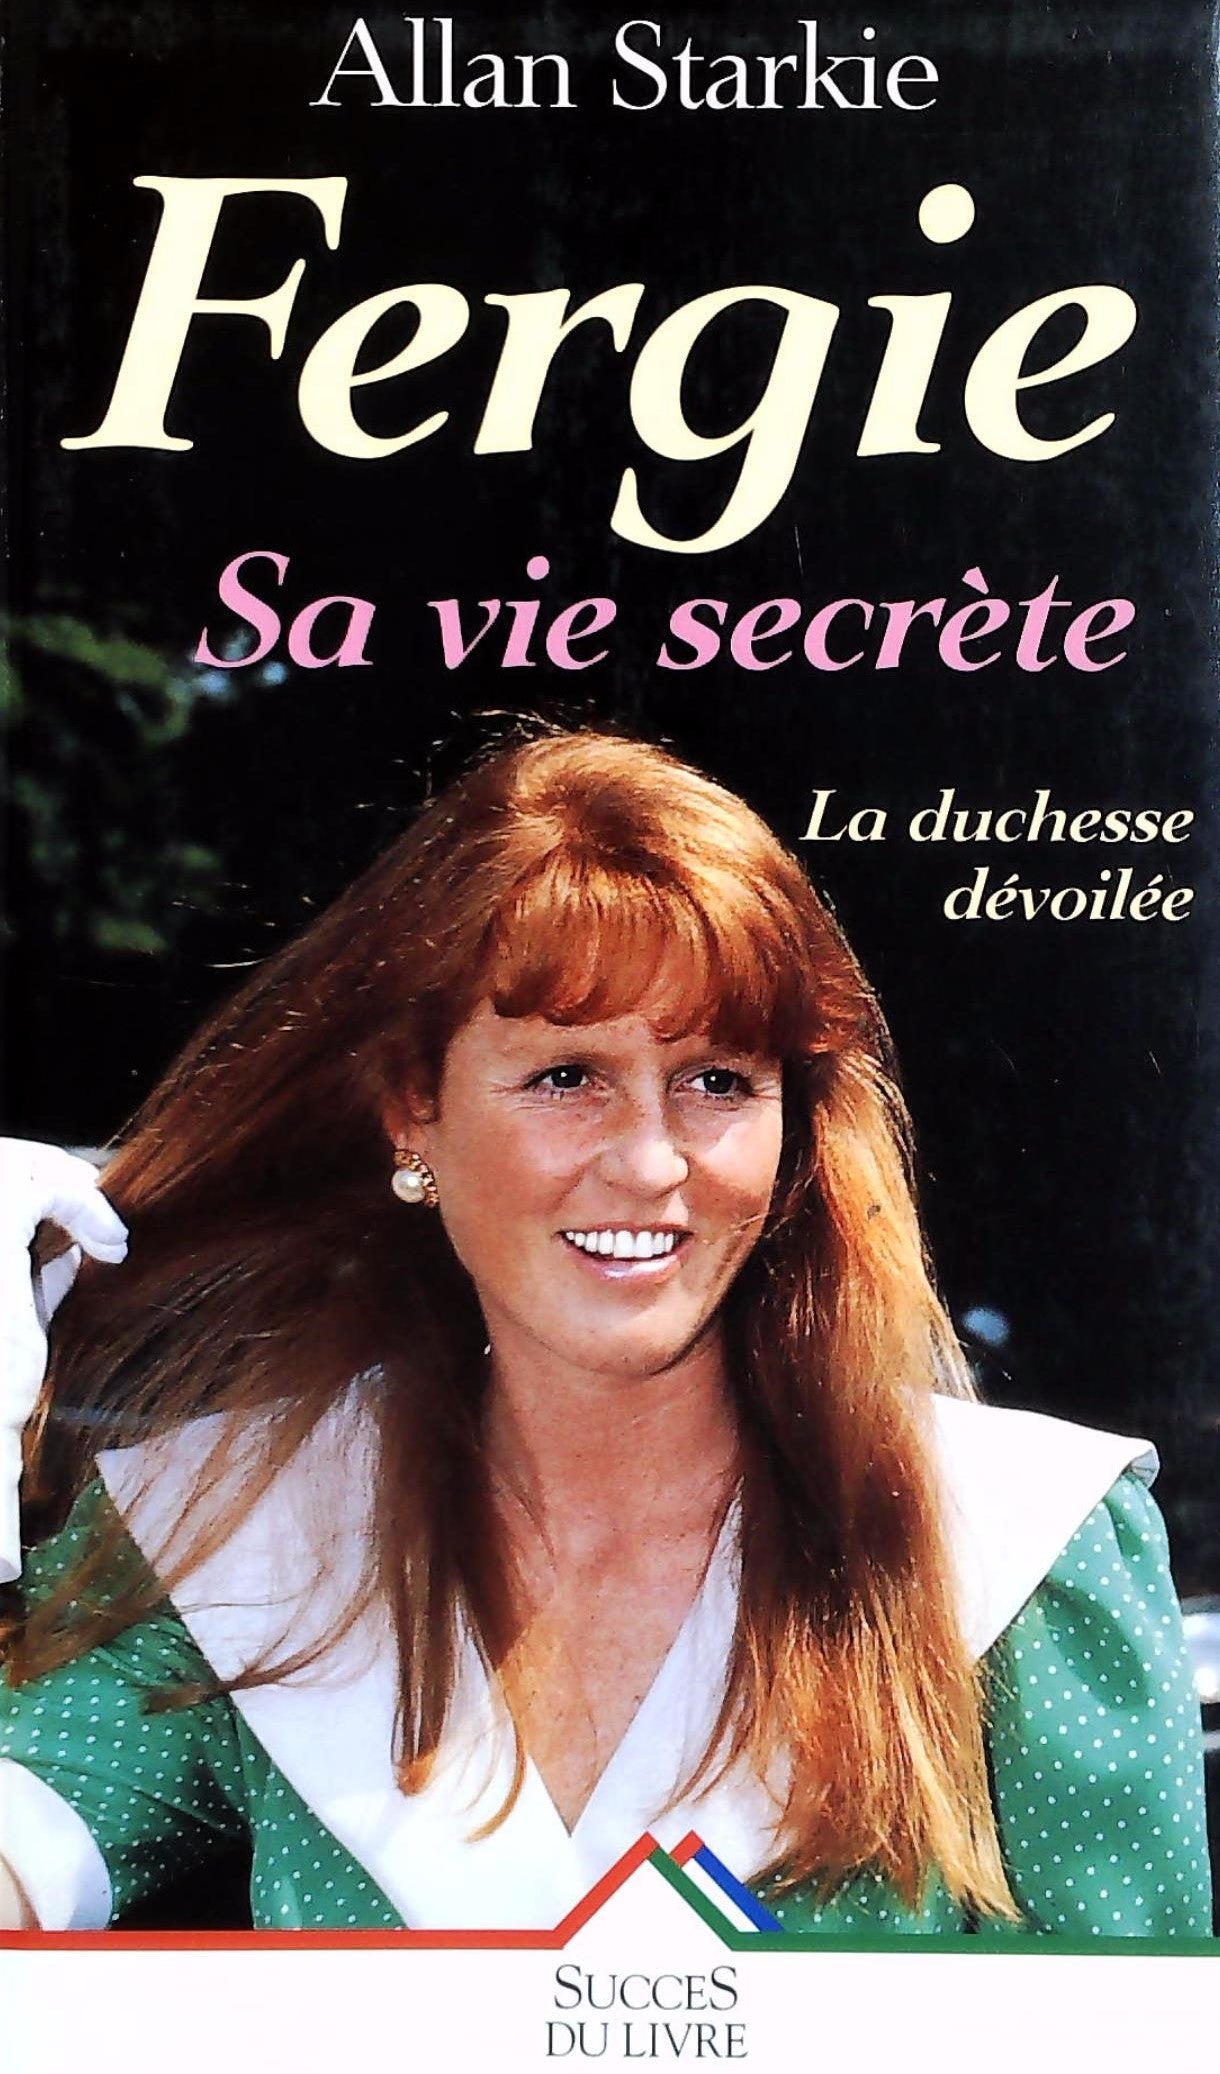 Livre ISBN 2738210198 Fergie, sa vie secrète : La duchesse dévoilée (Allan Starkie)